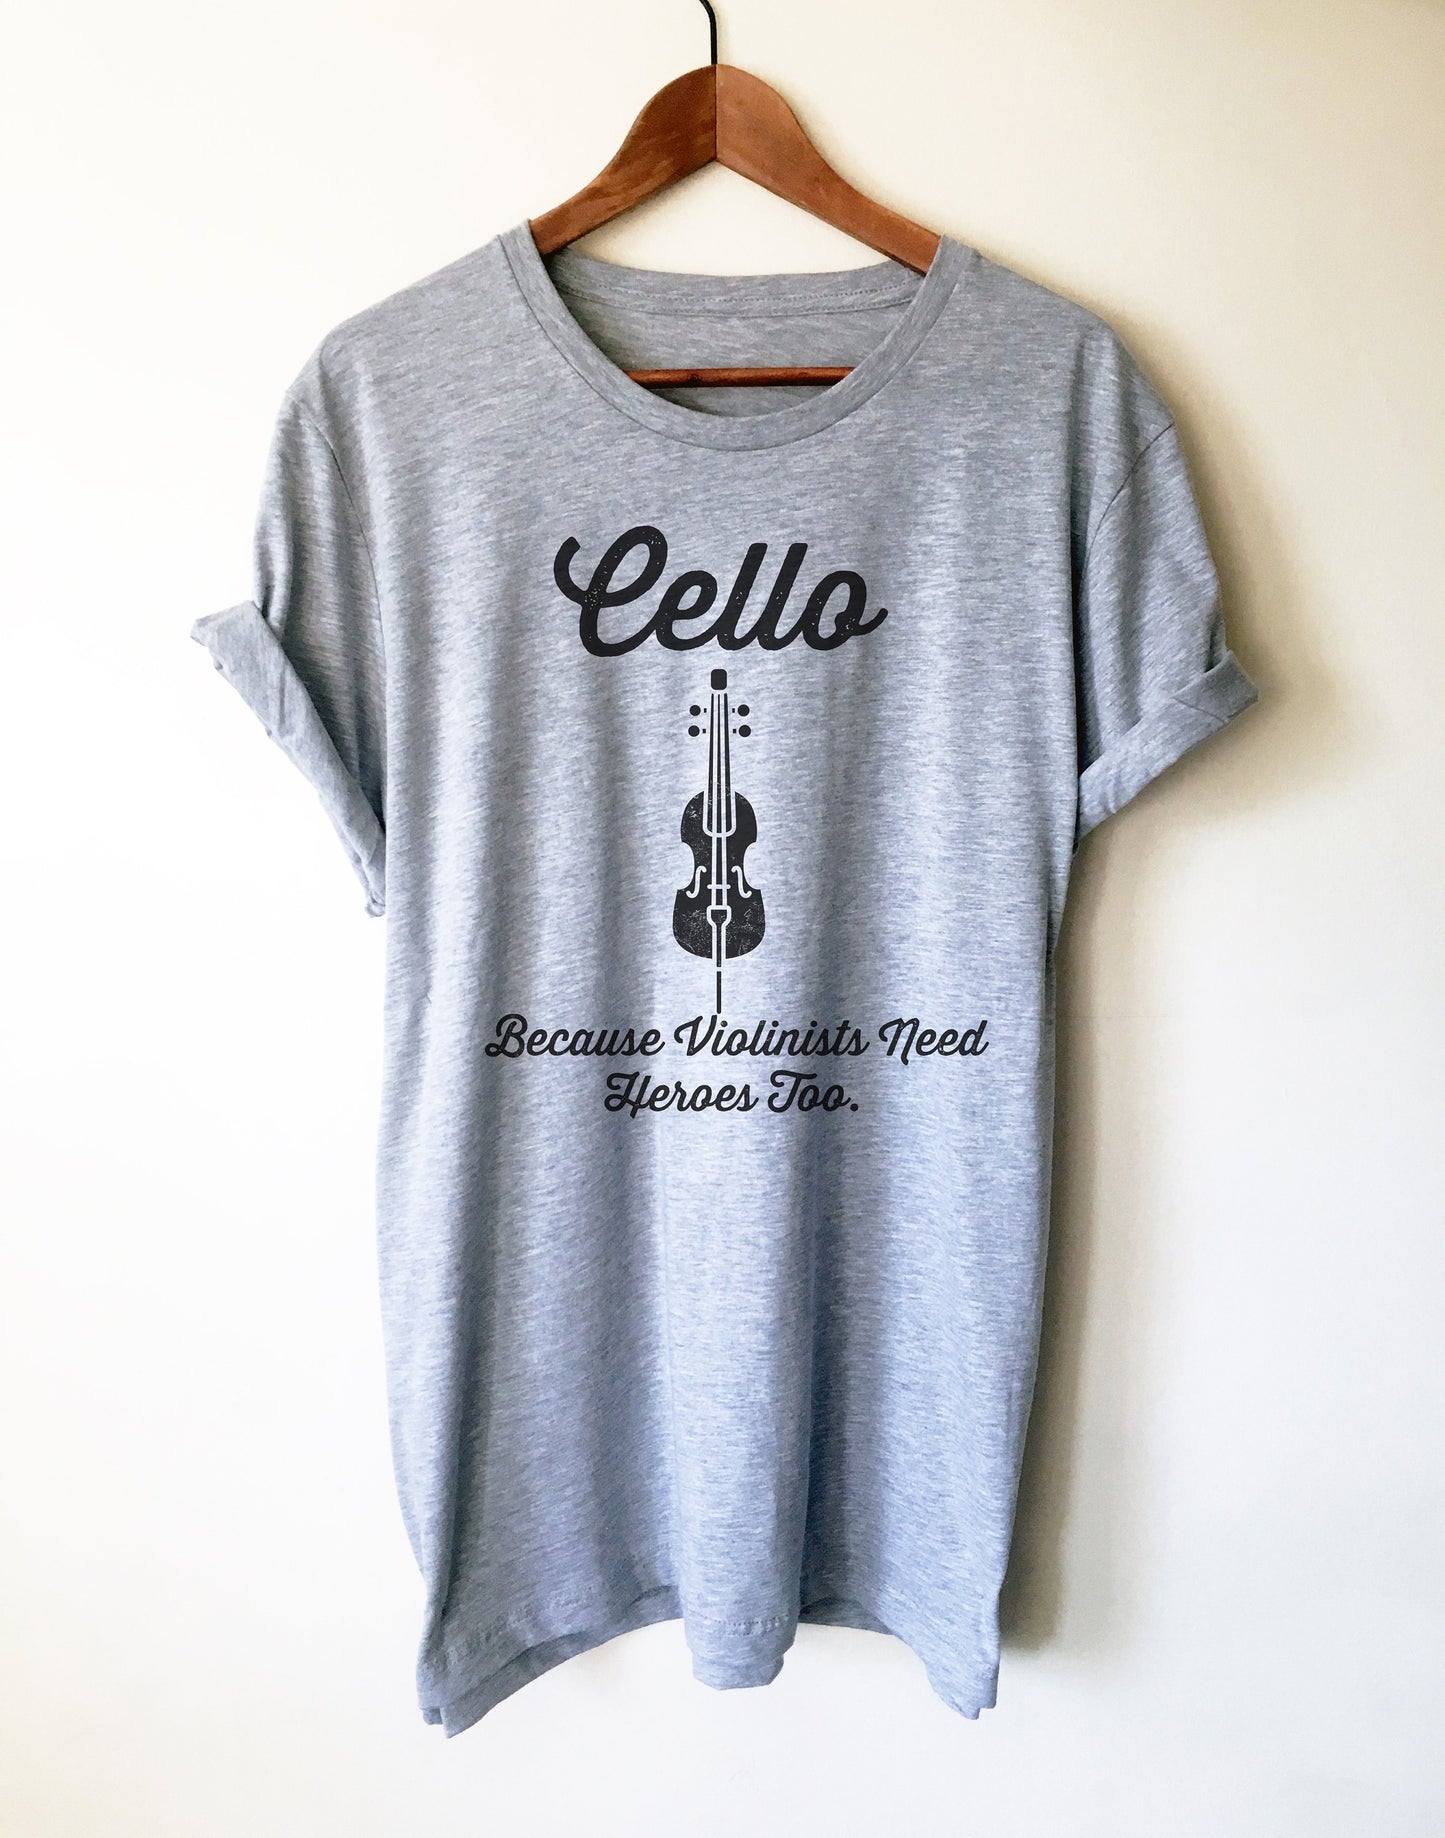 Cello Unisex Shirt - Cello Shirt, Cello Gift, Cellist Gift, Cellist Shirt, Musician Gift, Music Shirt, Music Teacher Gift, Music Gift